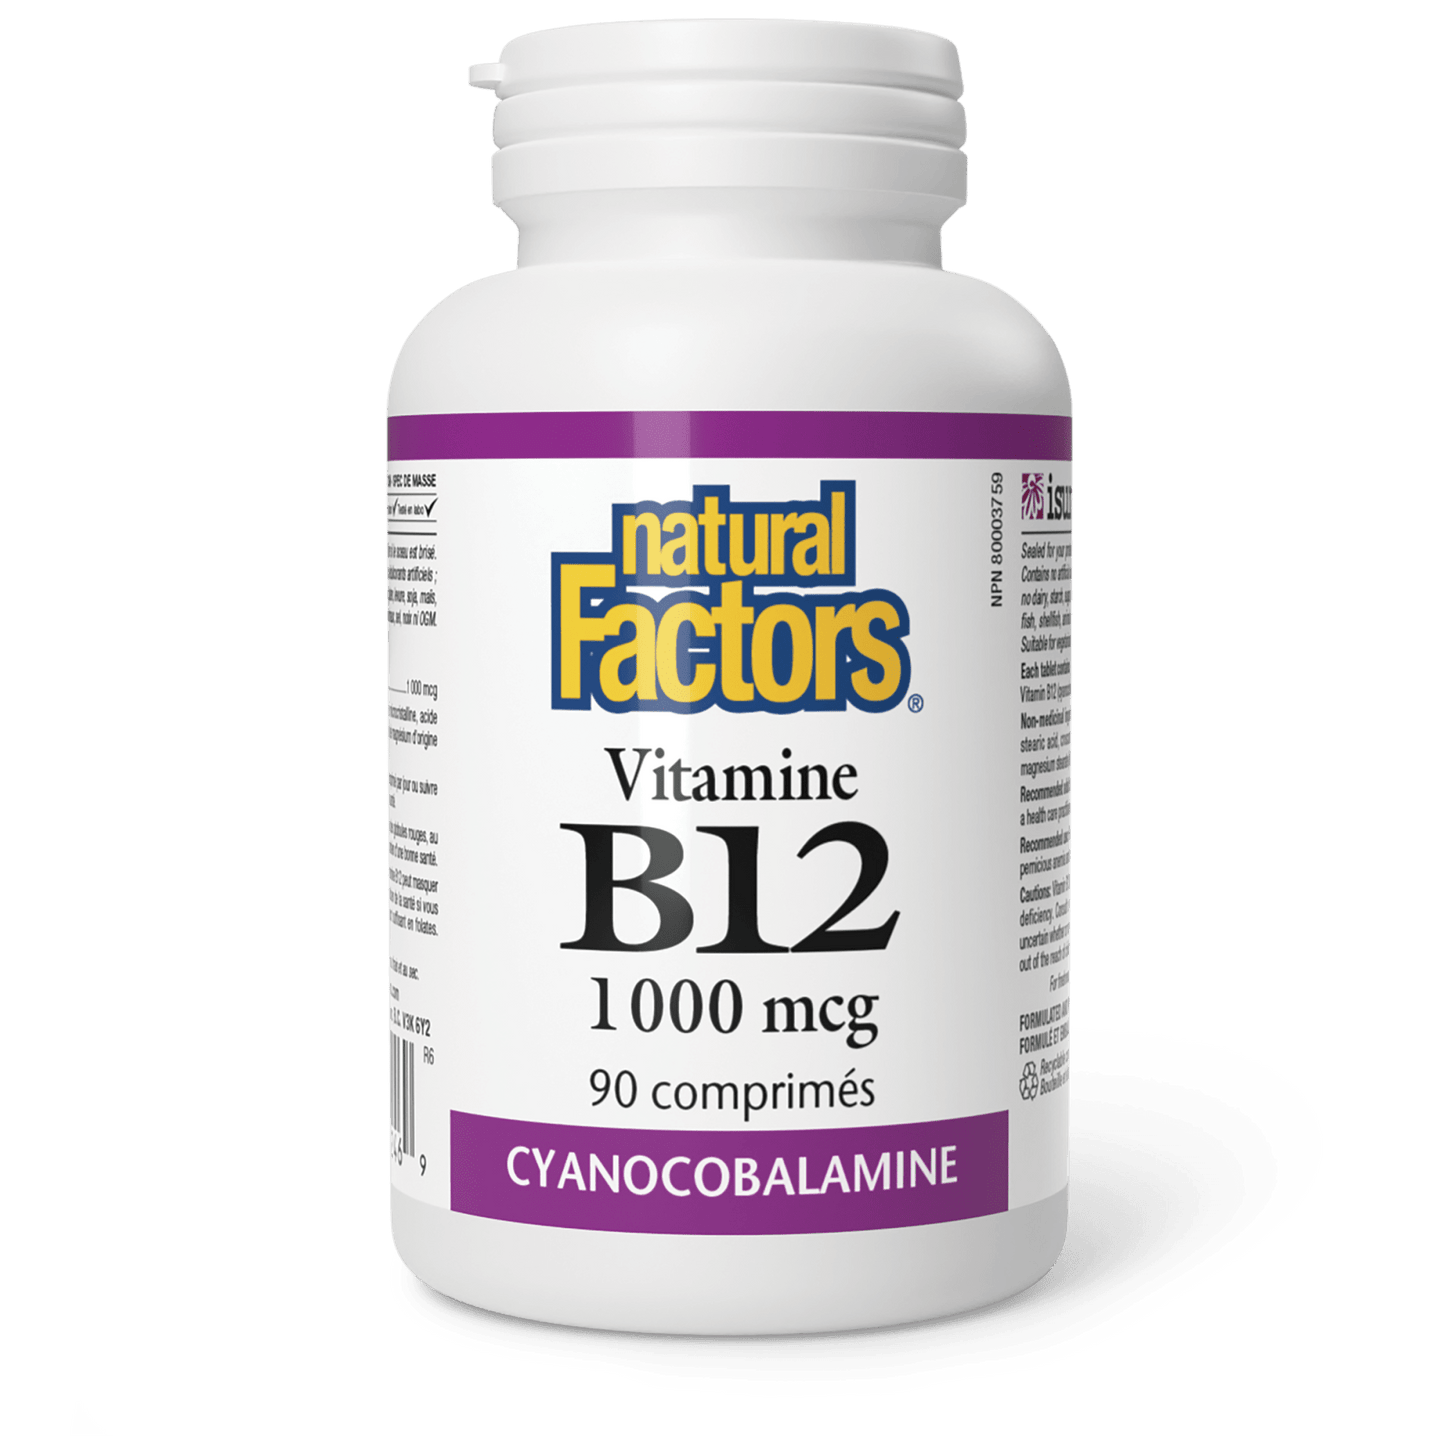 Vitamine B12 1 000 mcg, Natural Factors|v|image|1246